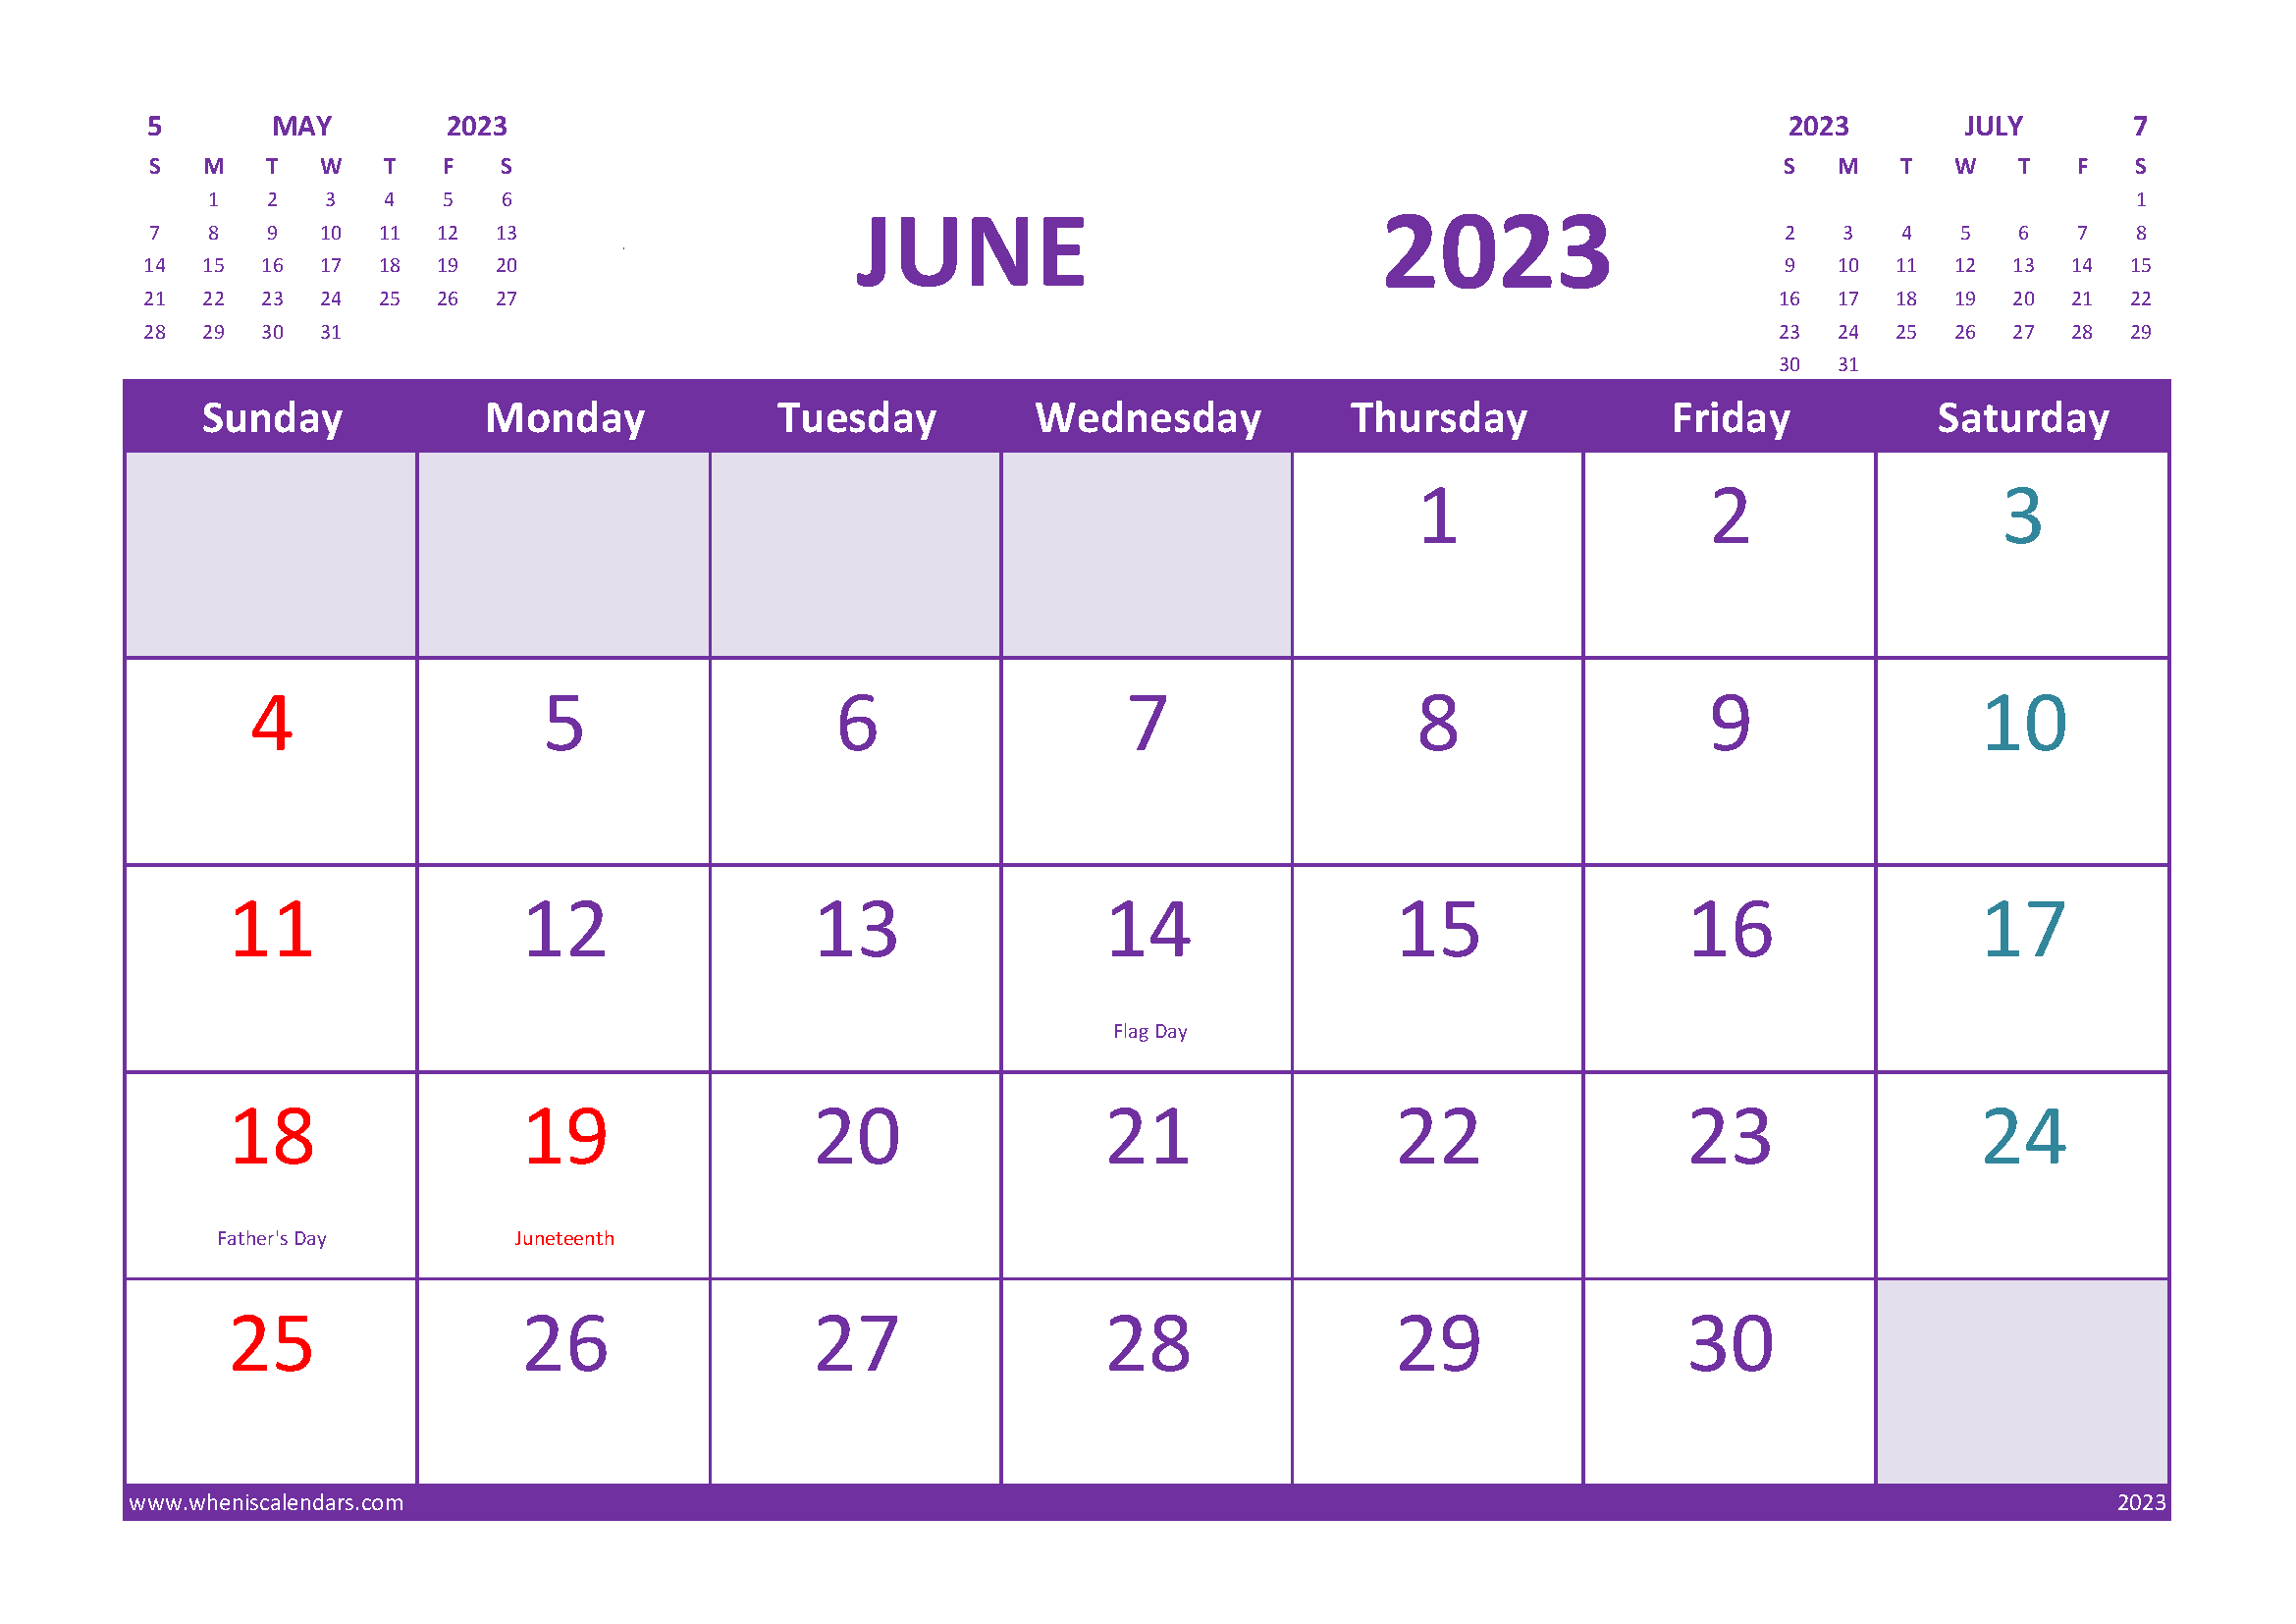 Free Printable Calendar June 2023 With Holidays